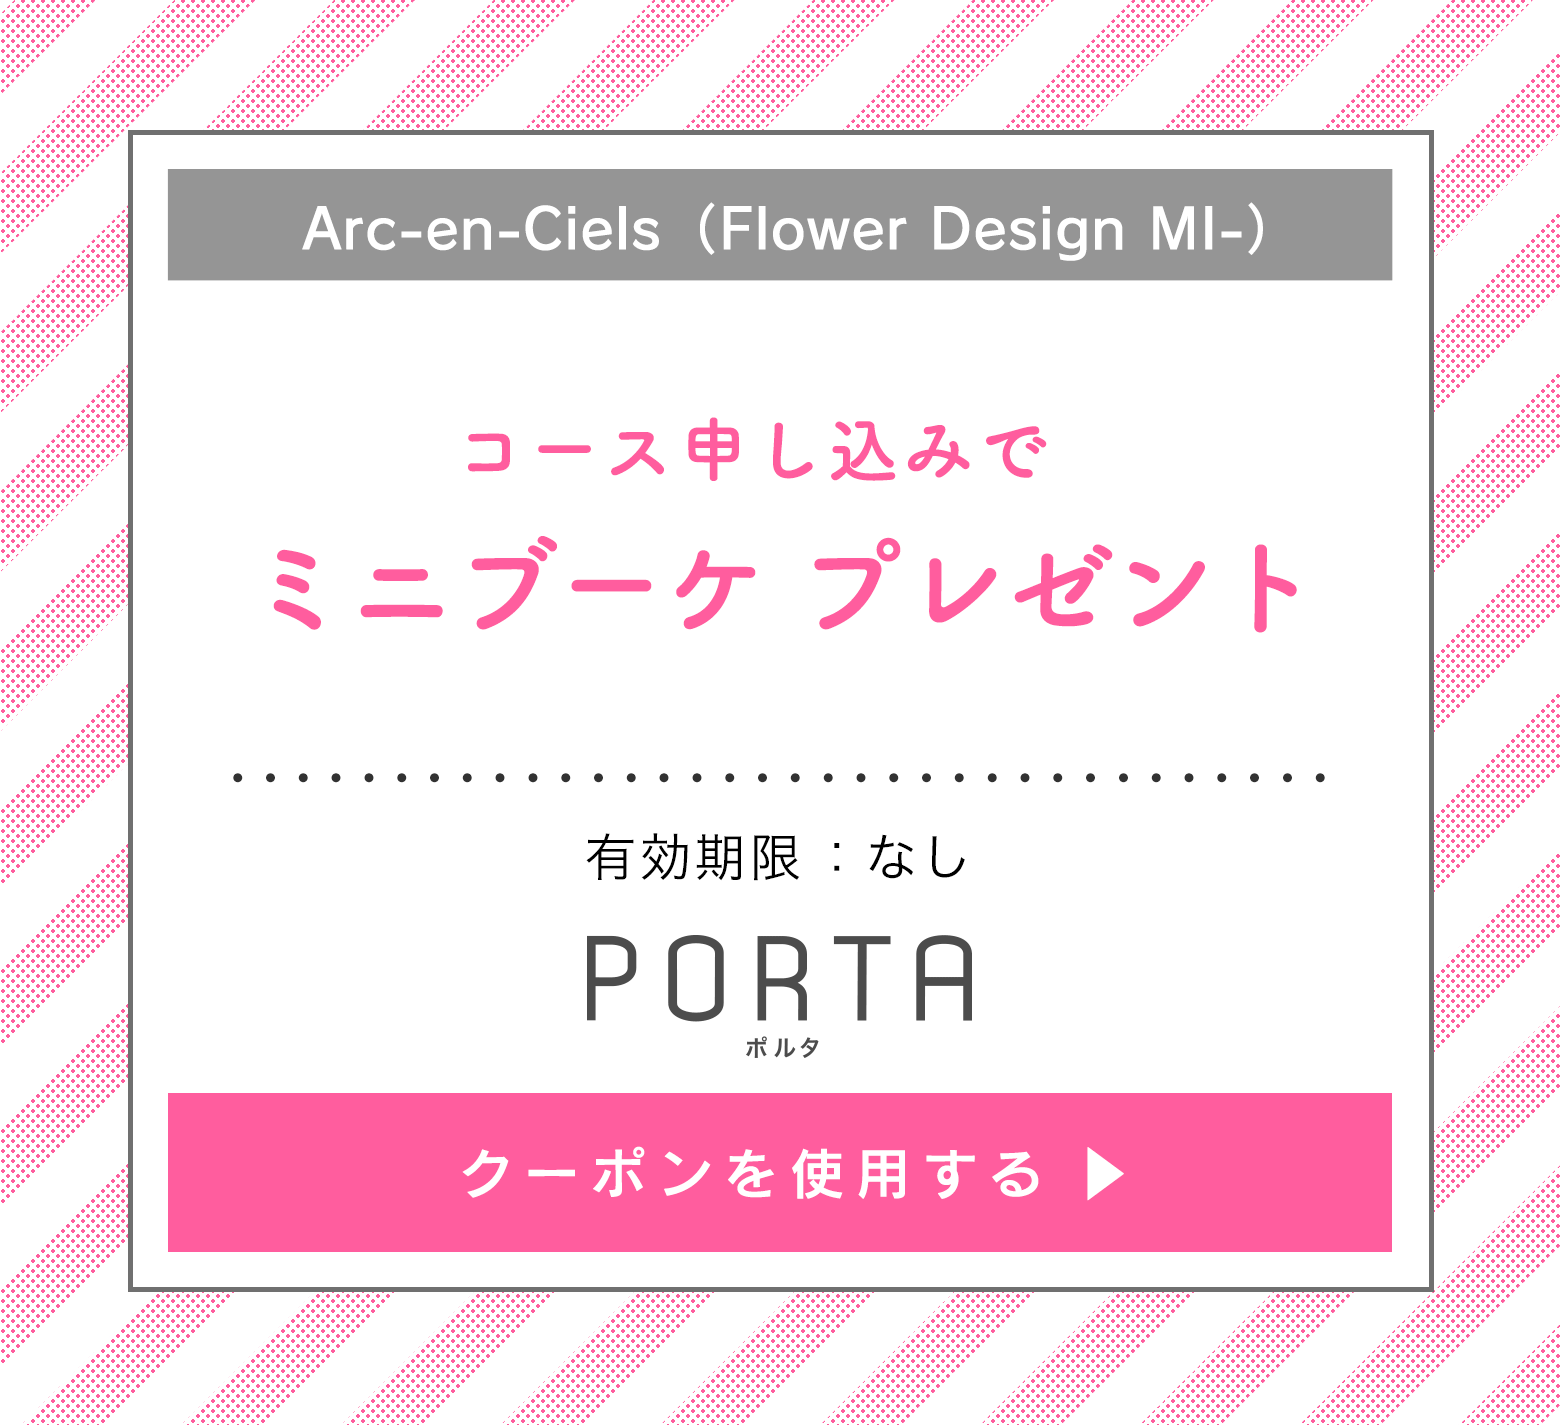 Arc-en-Ciels（Flower Design MI-） コース申し込みでミニブーケプレゼント　のクーポンを使用する